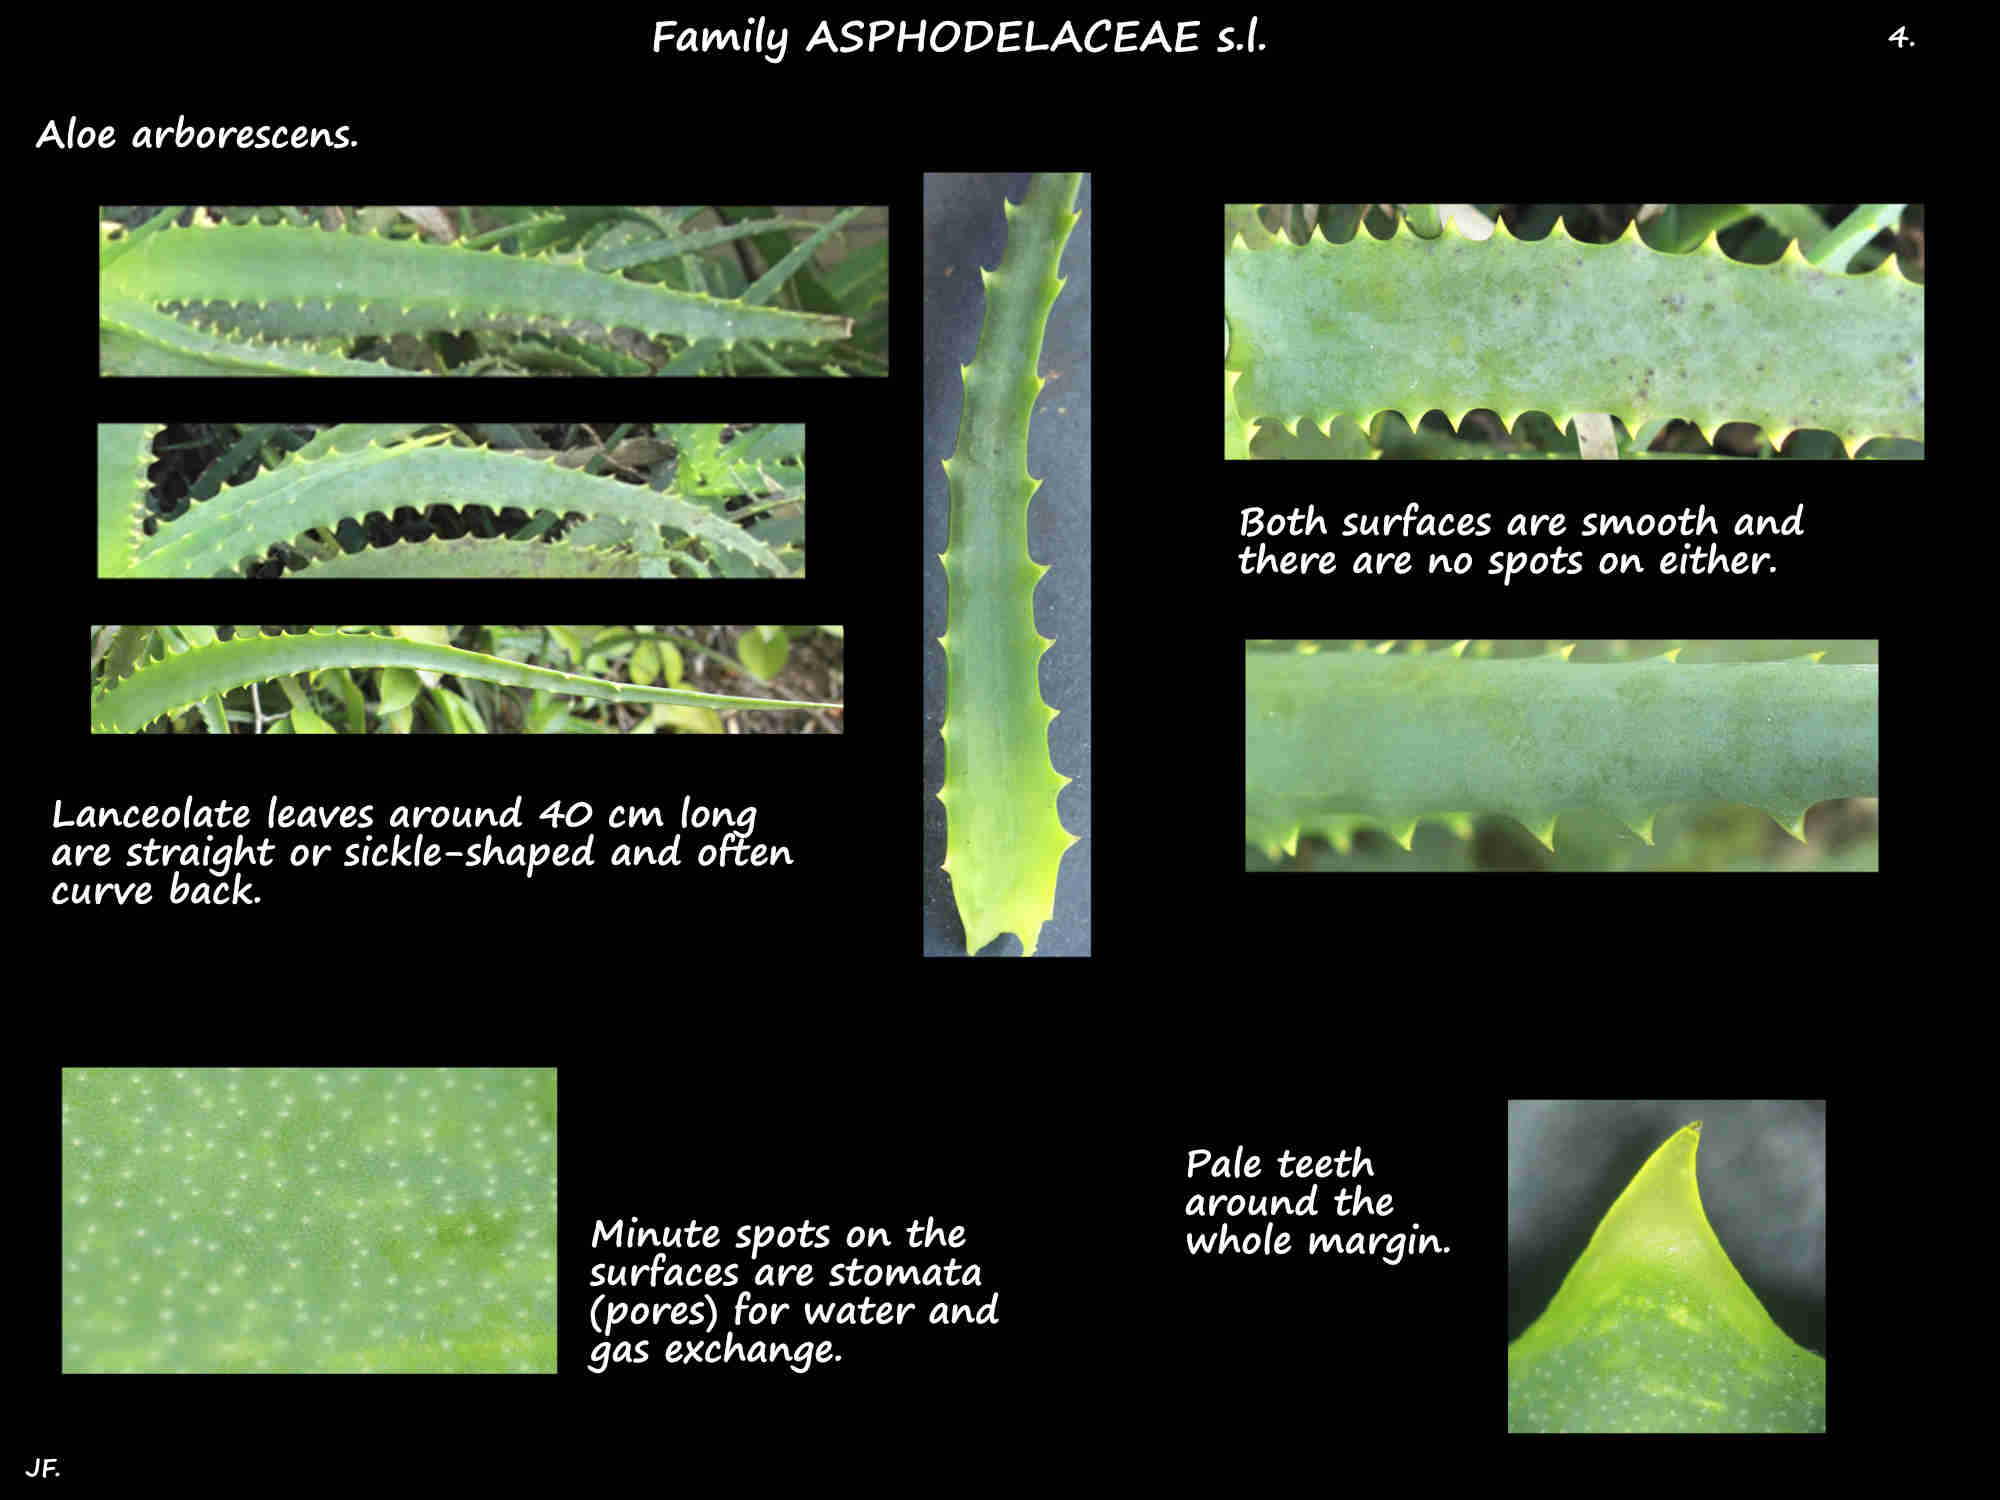 4 Aloe arborescens leaves with teeth & no spots